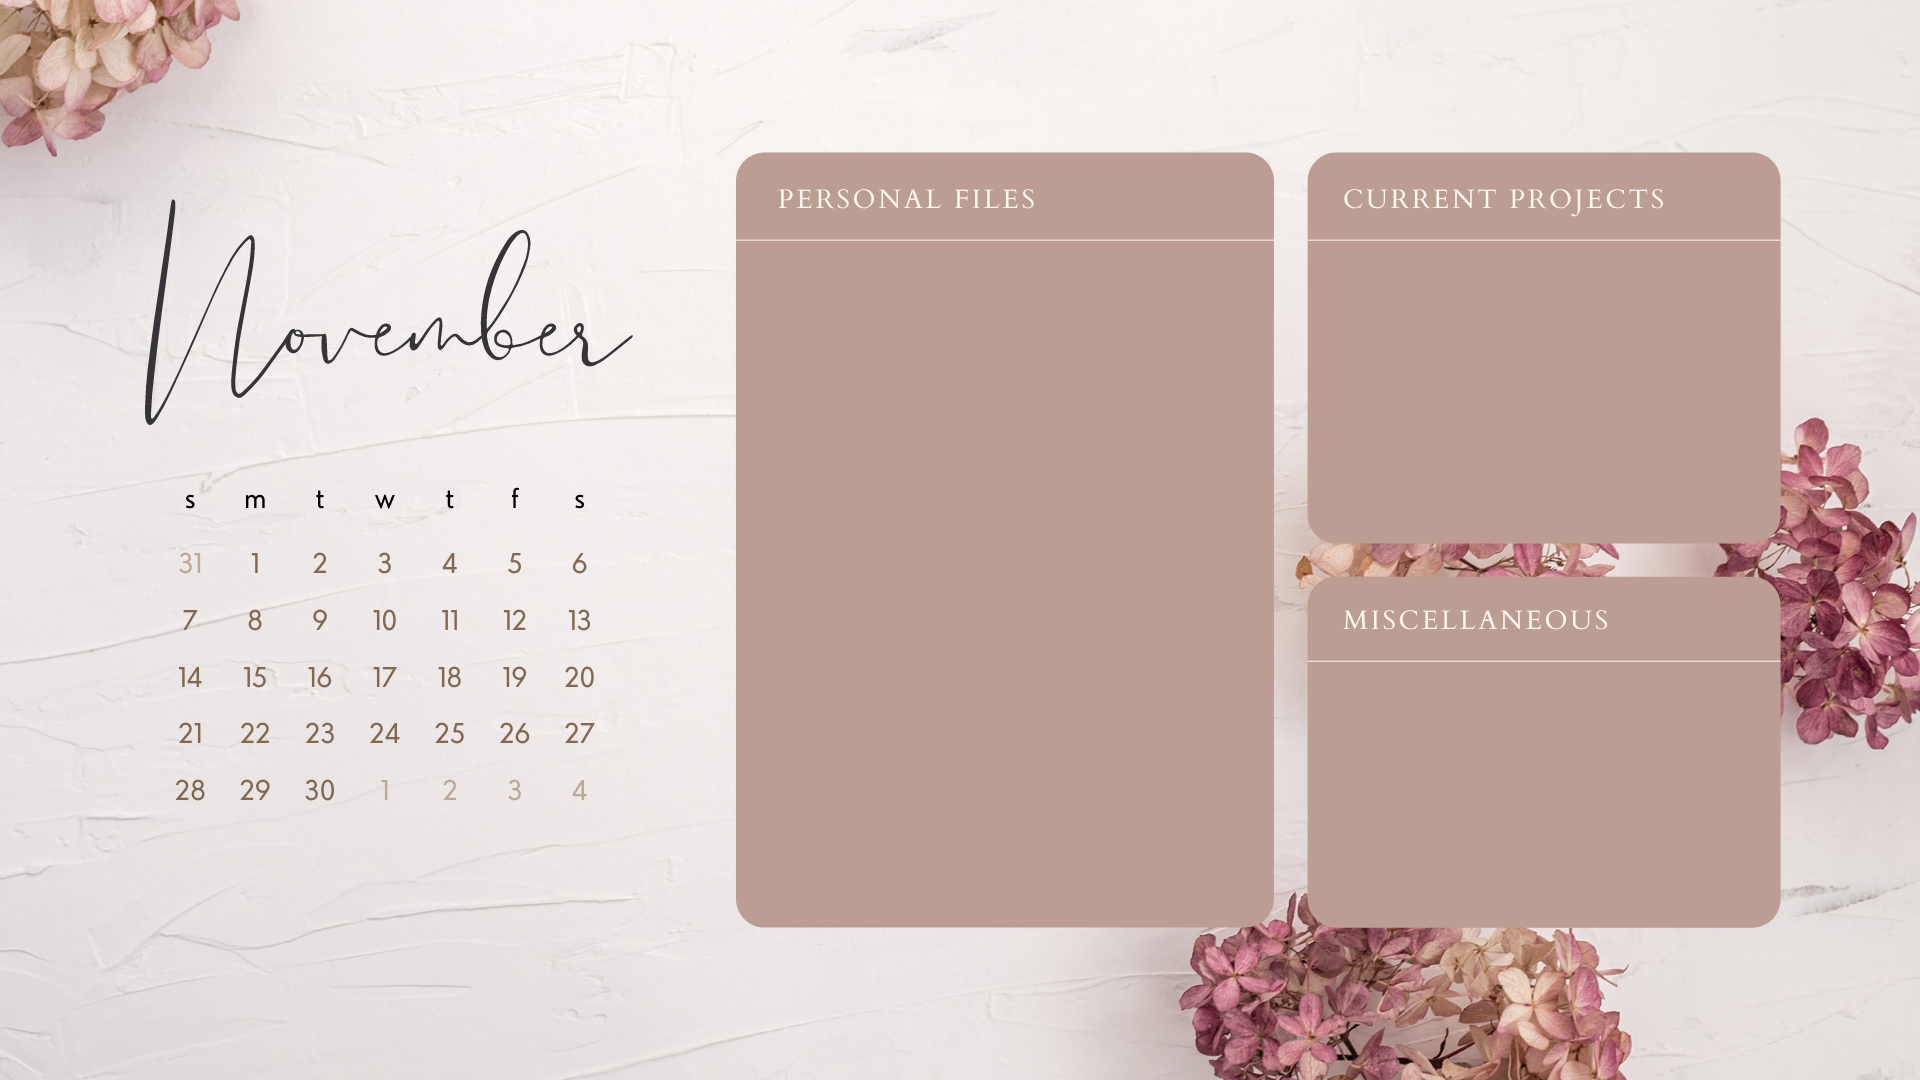 Pink Dry Floral Branch Textured Background Calendar Organizer Desktop Wallpaper.png